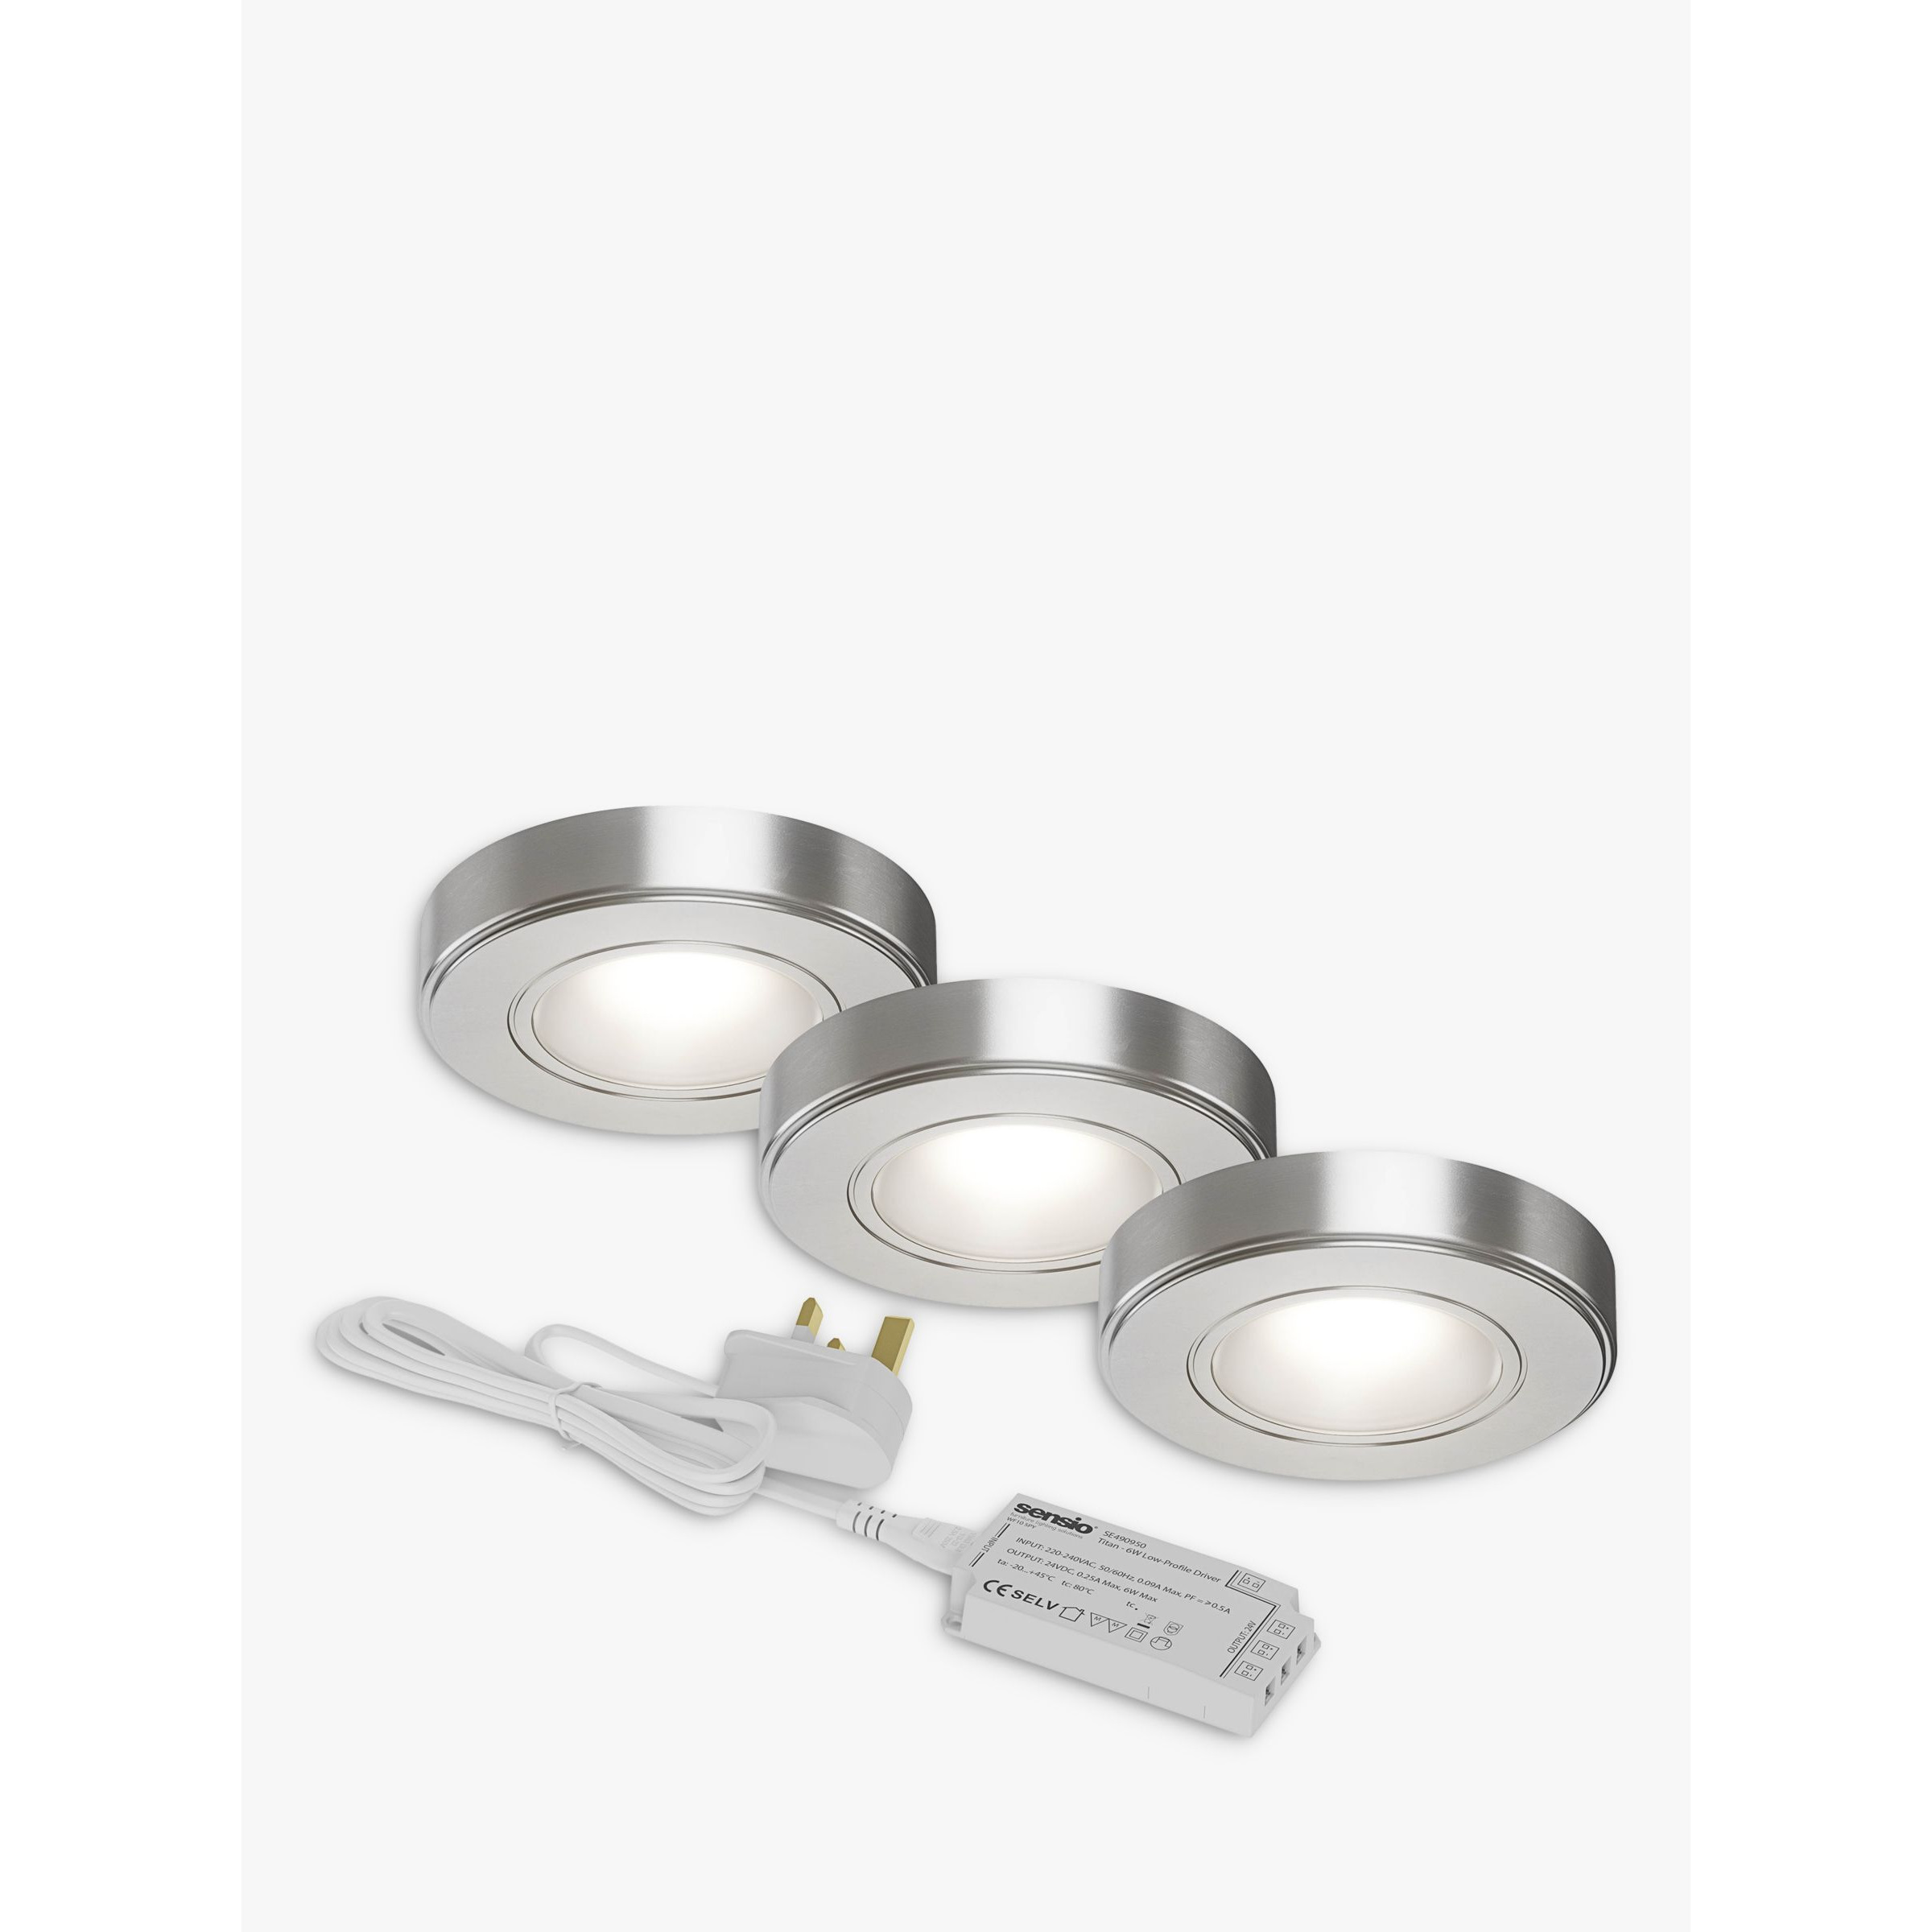 Sensio Zeta LED Under Kitchen Cabinet Spot Lights & Driver, Pack of 3, White/Stainless Steel